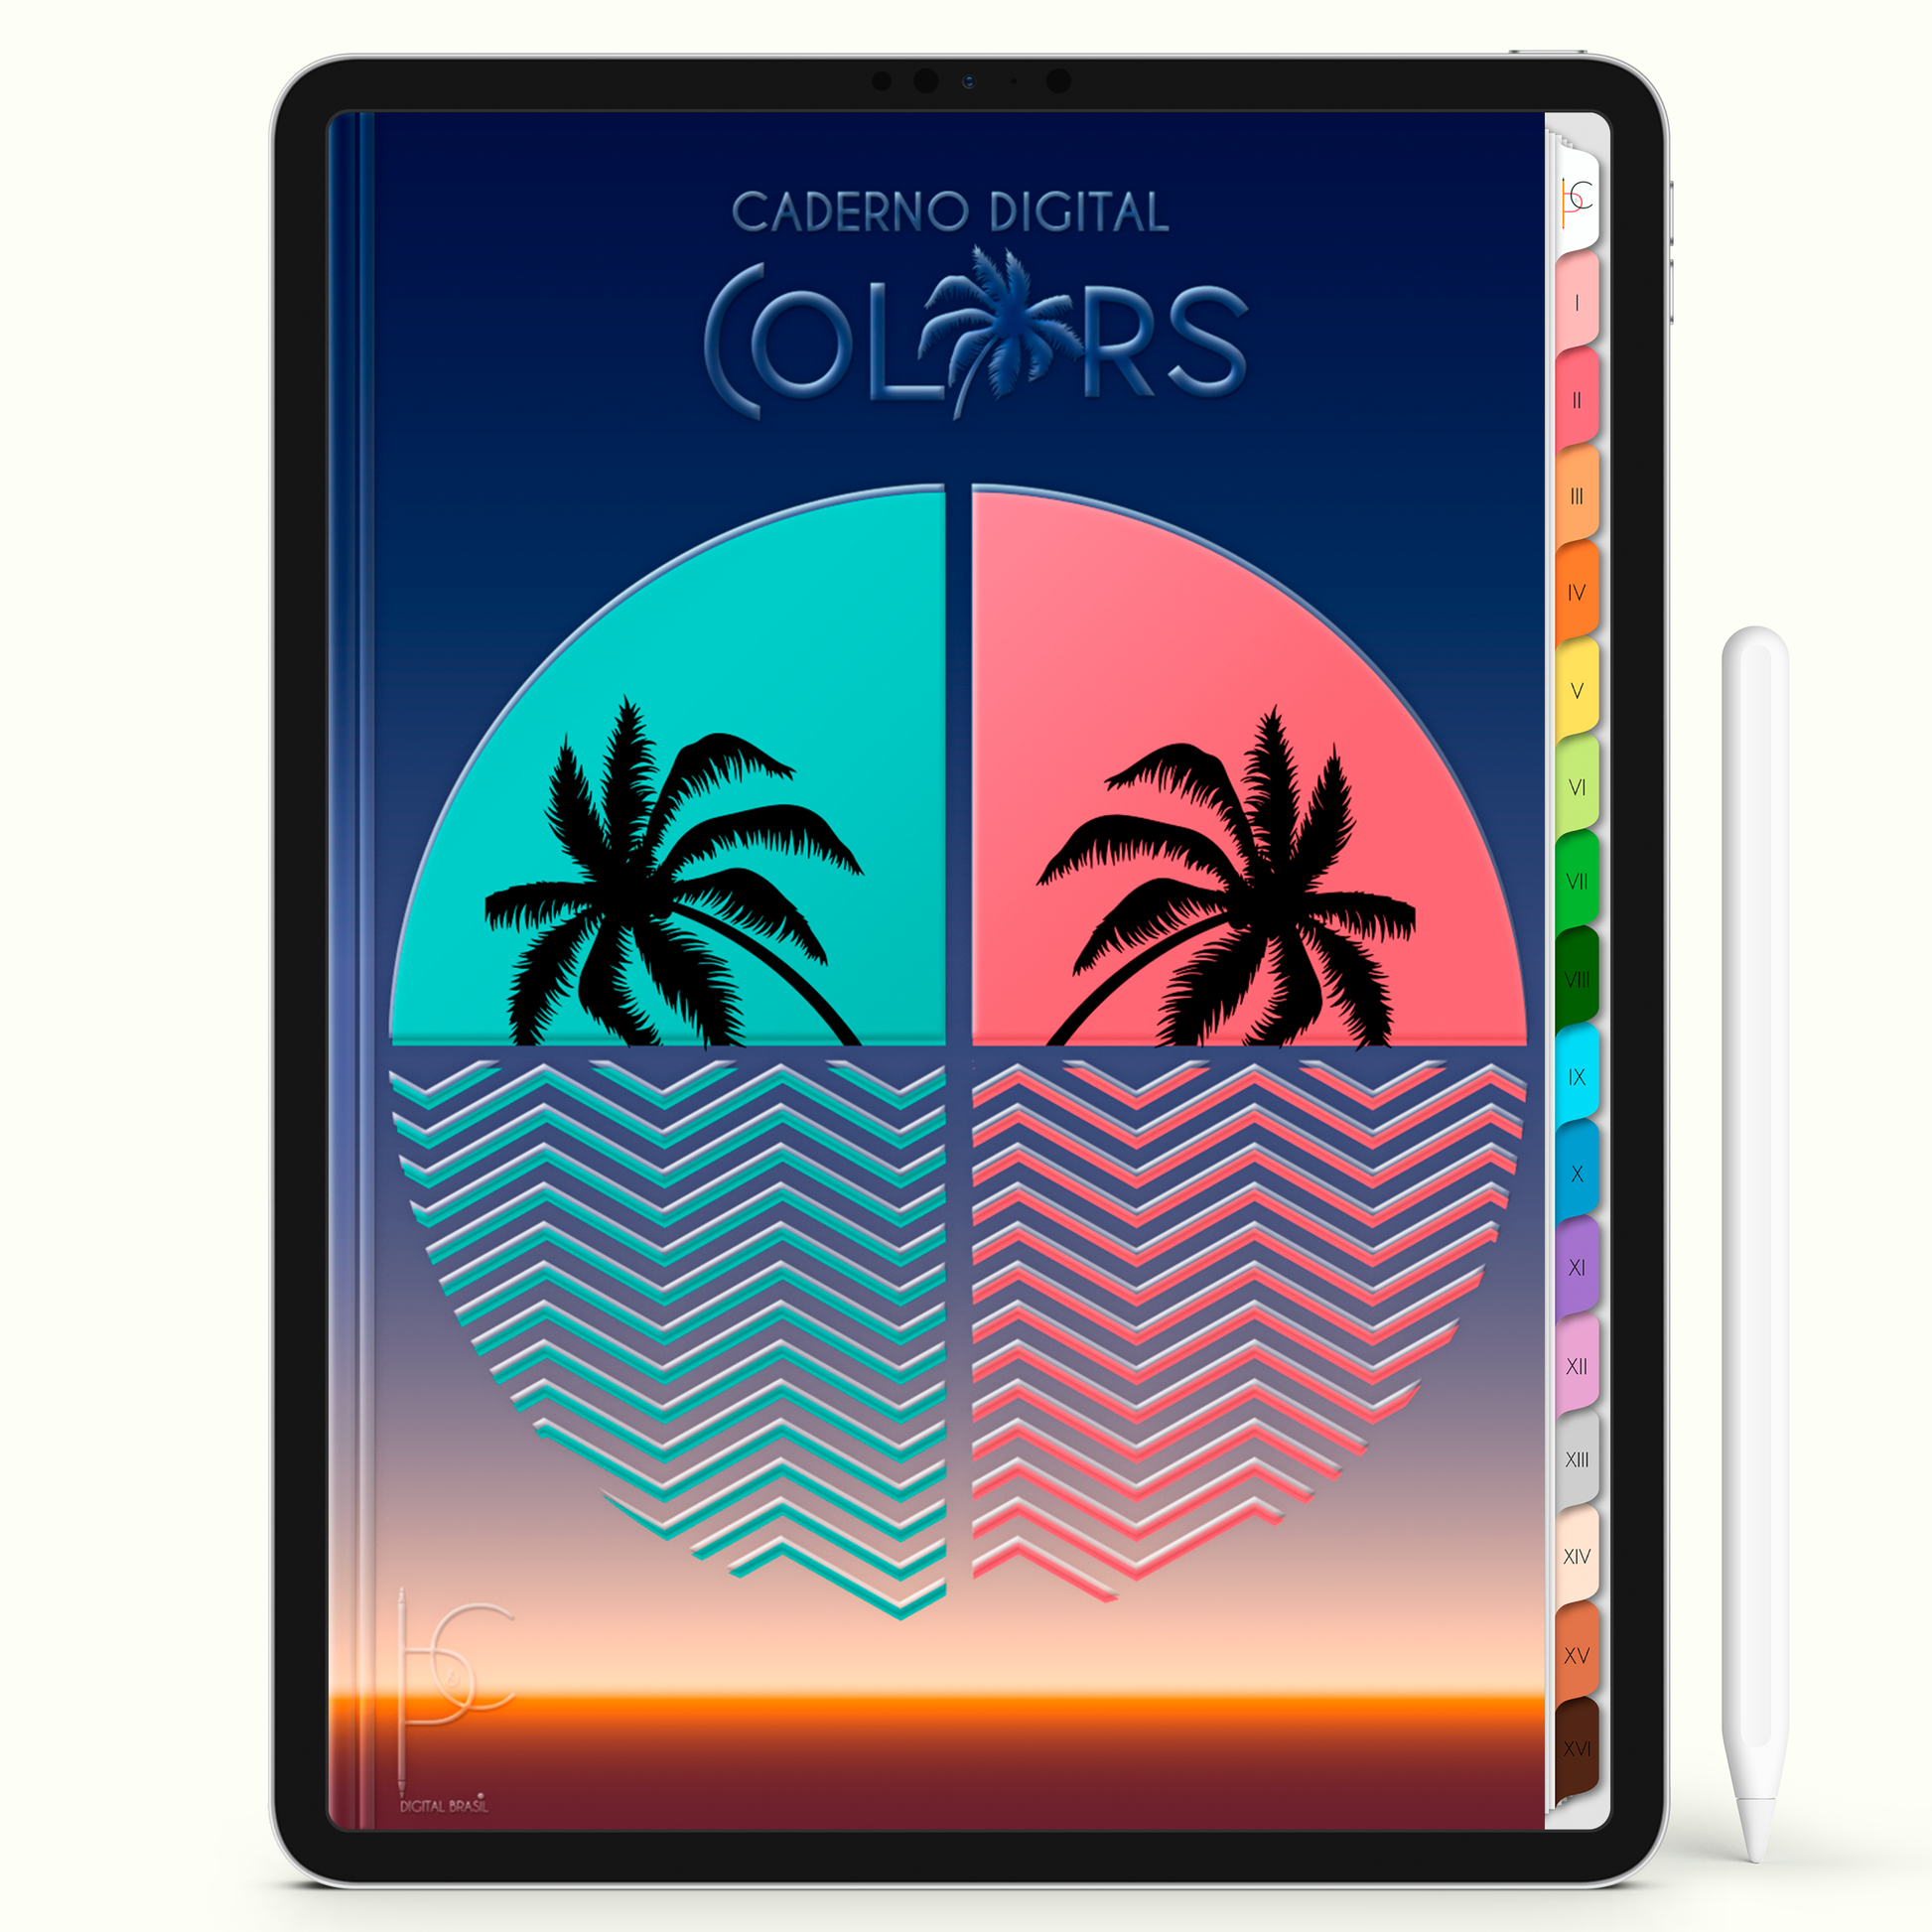 Caderno Digital Colors Colorful 16 Matérias • Para iPad e Tablet Android • Download instantâneo • Sustentável